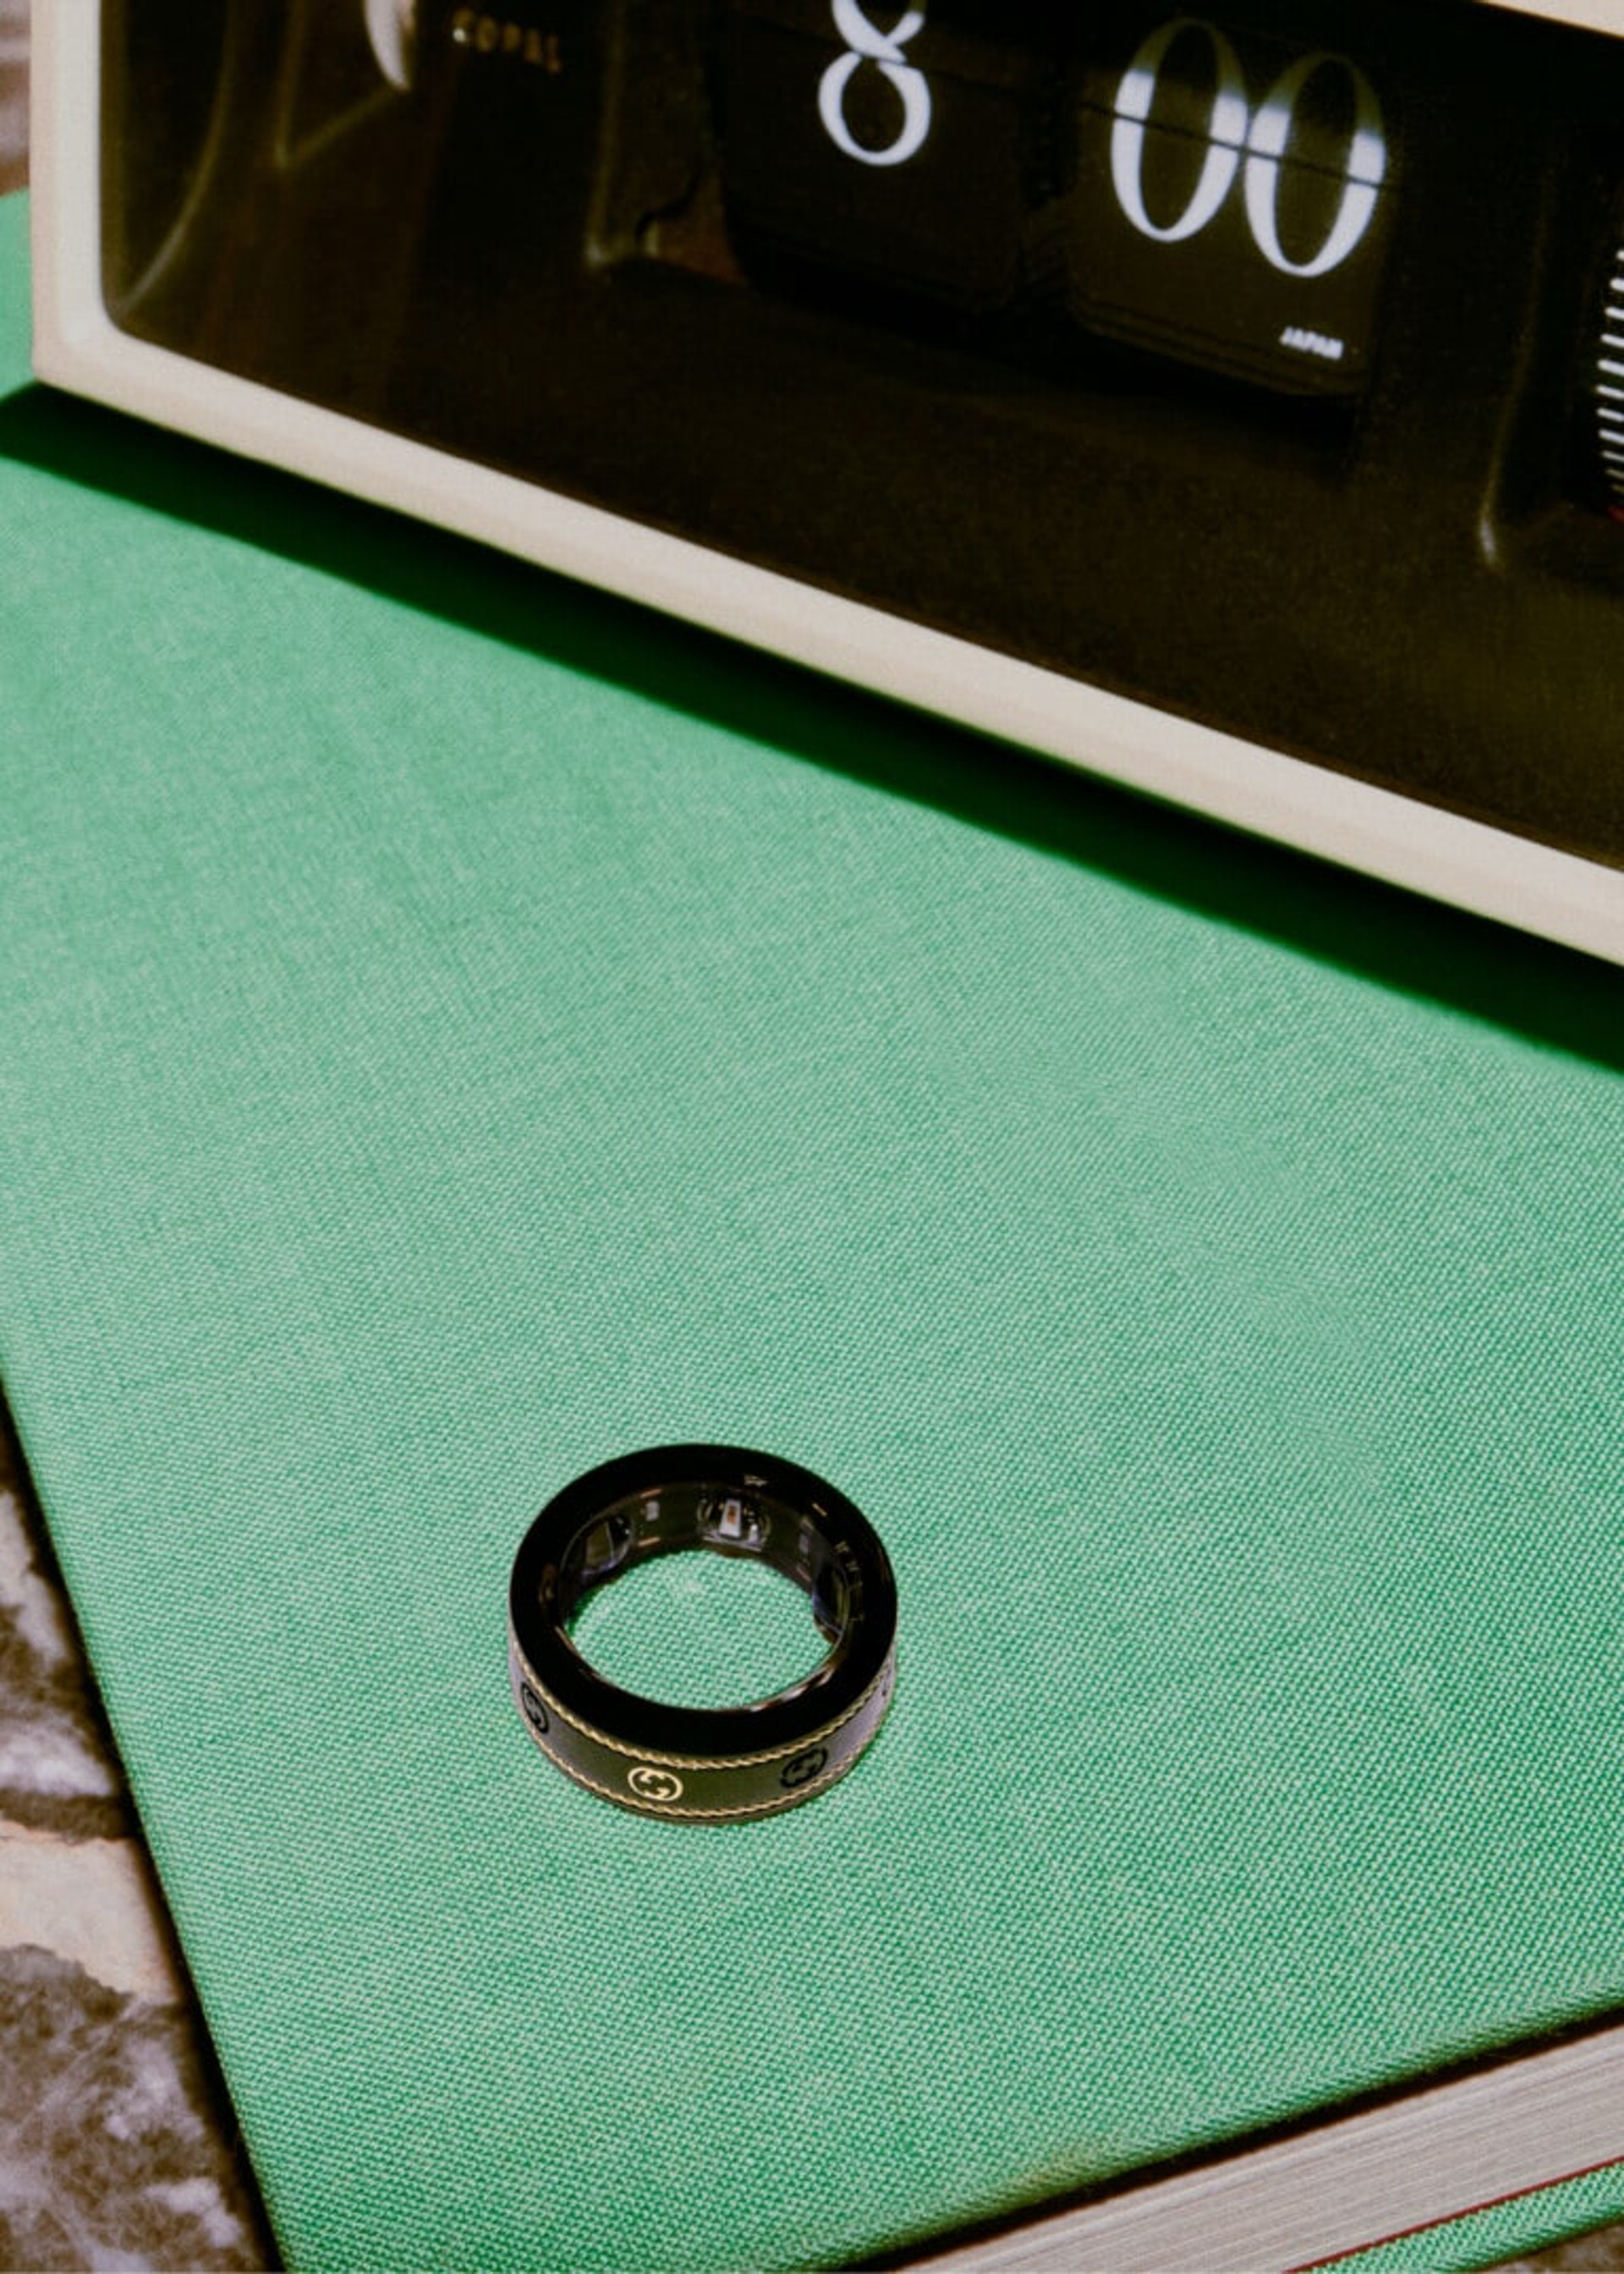 Gucci x Oura 智能戒指外形與 Gucci 旗下的黑金色招牌戒指出品 Icon Ring 非常相似，同樣是以黑色合成剛玉作為基礎素材，另外再在外邊加上 18k 黃金商標及編織裝飾。